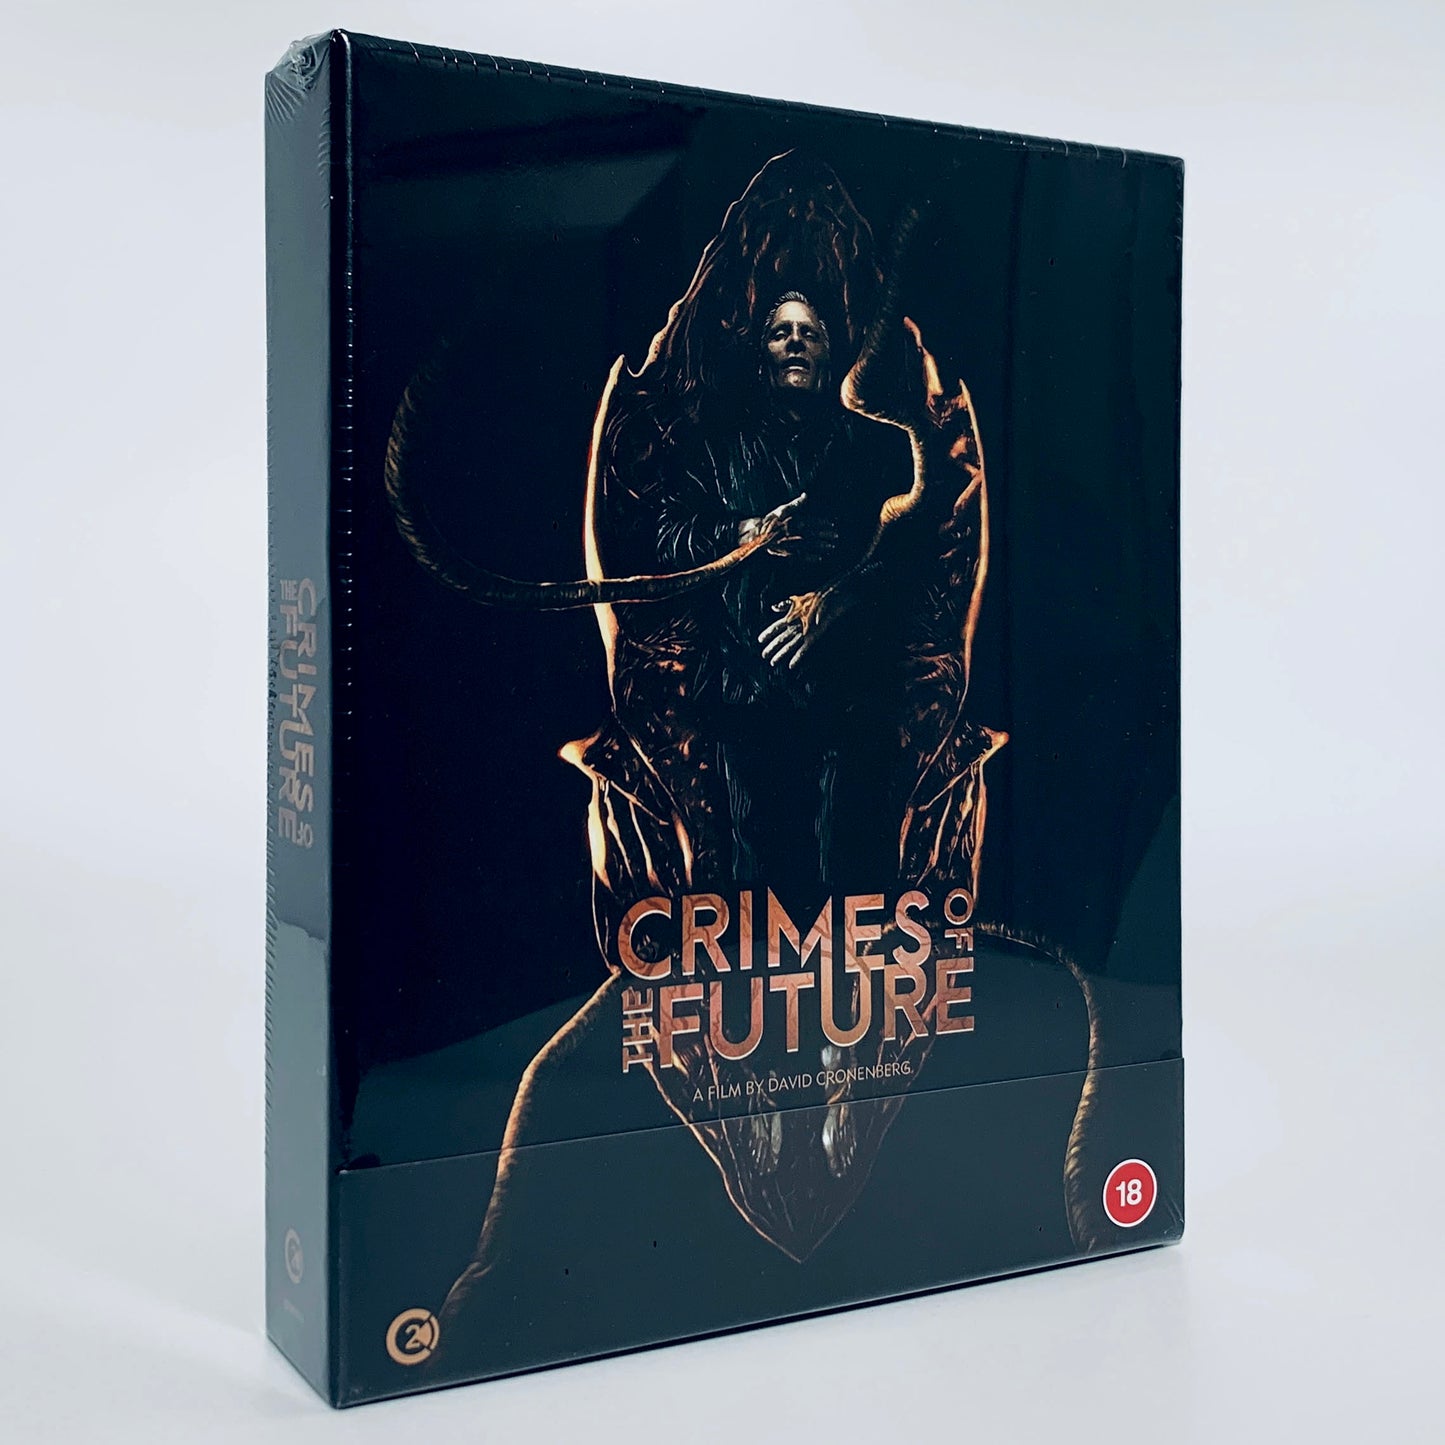 Crimes of the Future Limited Edition 4K Ultra HD Blu-ray Second Sight David Cronenberg Viggo Mortensen